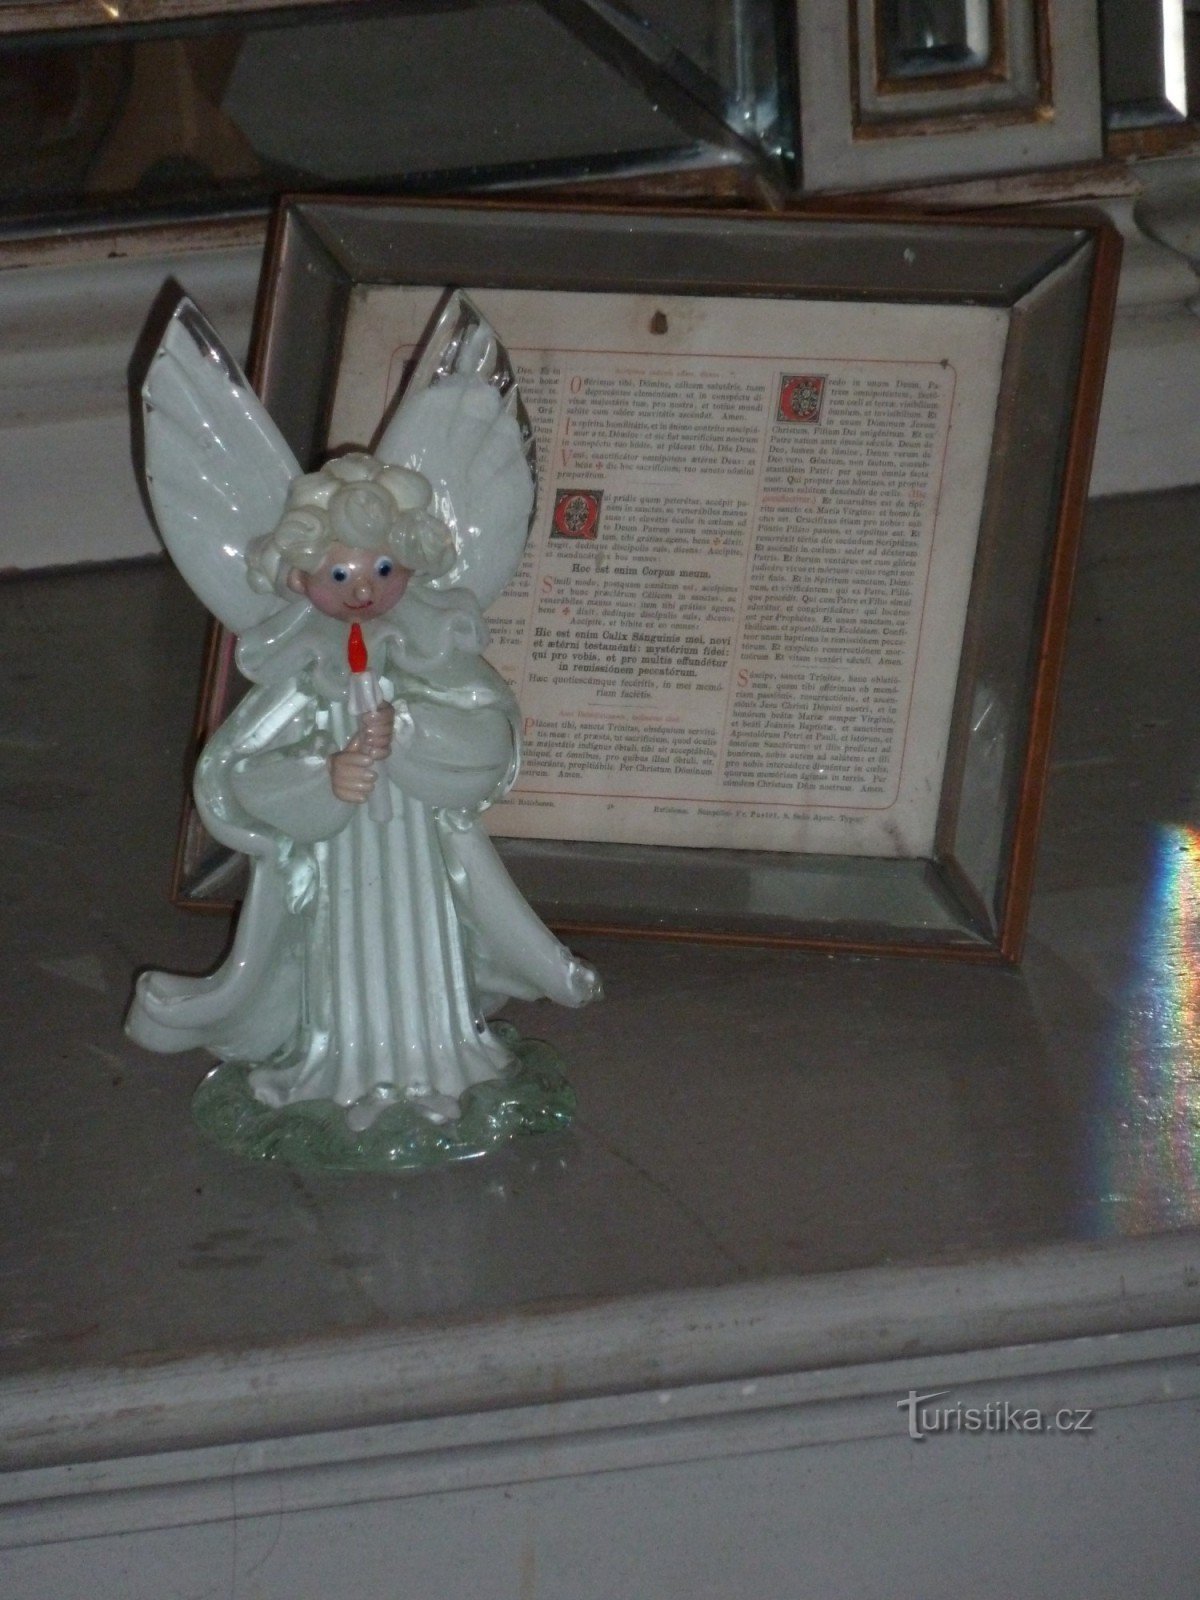 Harrachov-kapellet i Saint Elizabeth med en unik glasklocka